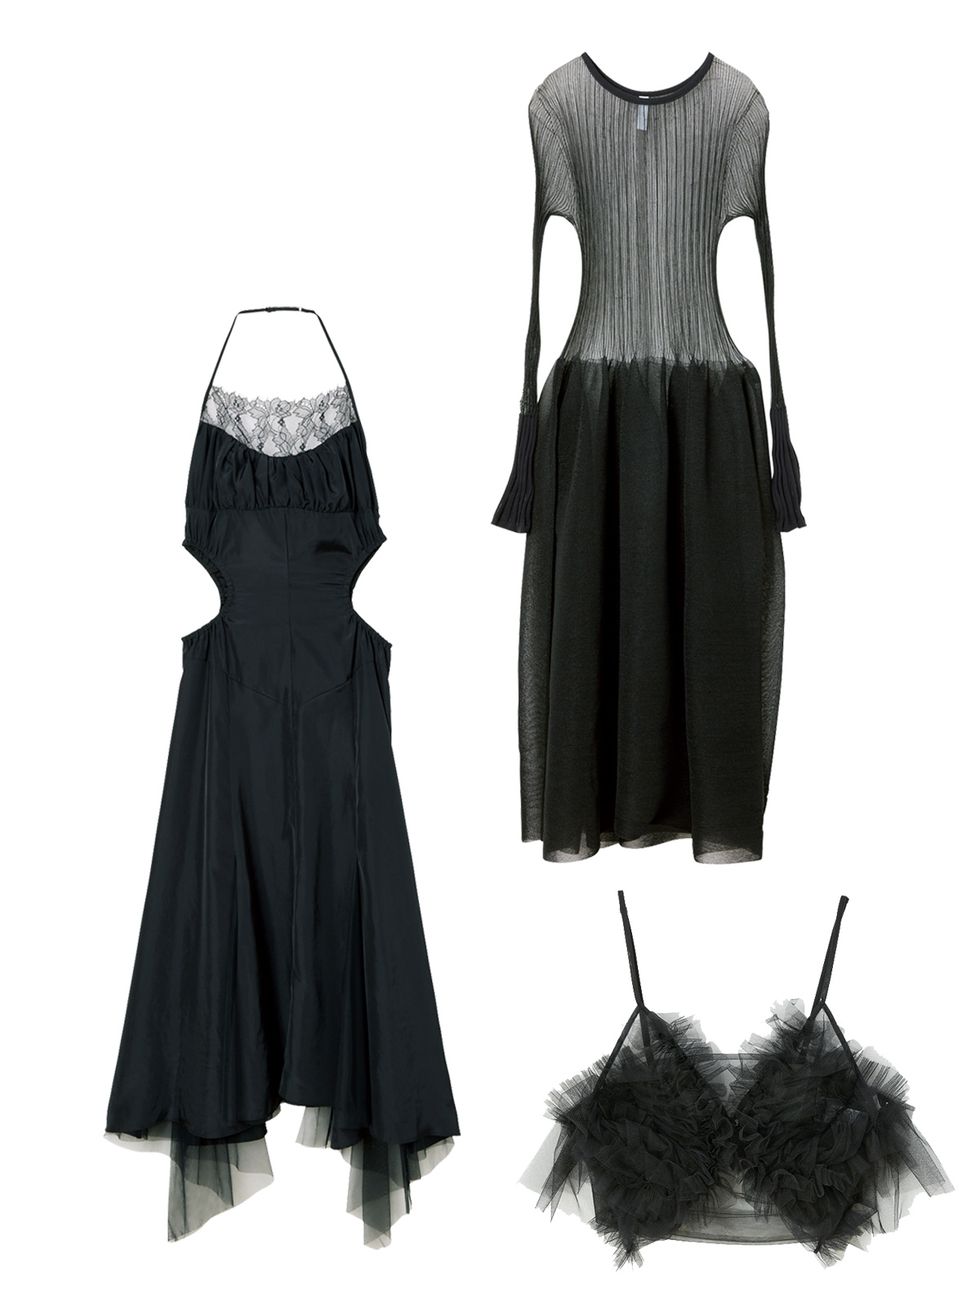 a black dress and a black dress